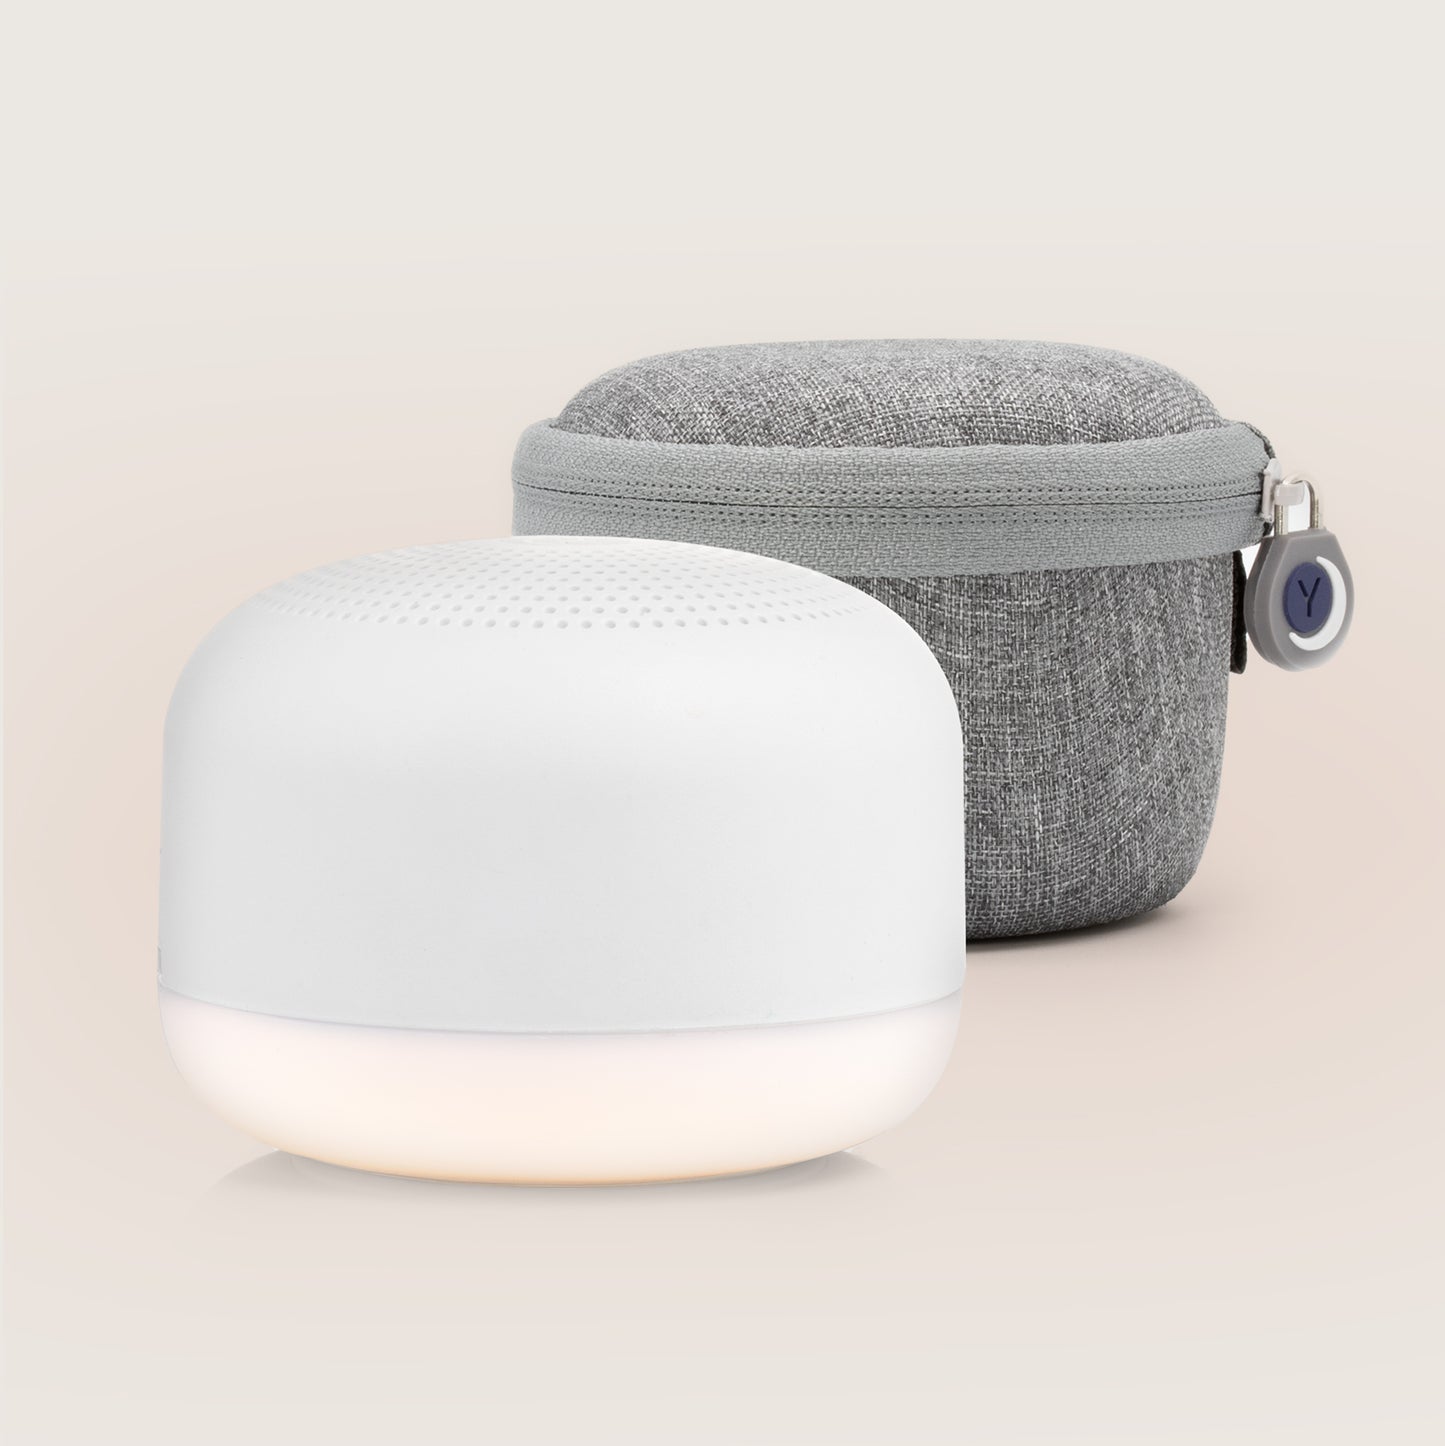 Travel Mini Sound Machine with Nightlight, White, and Travel Case